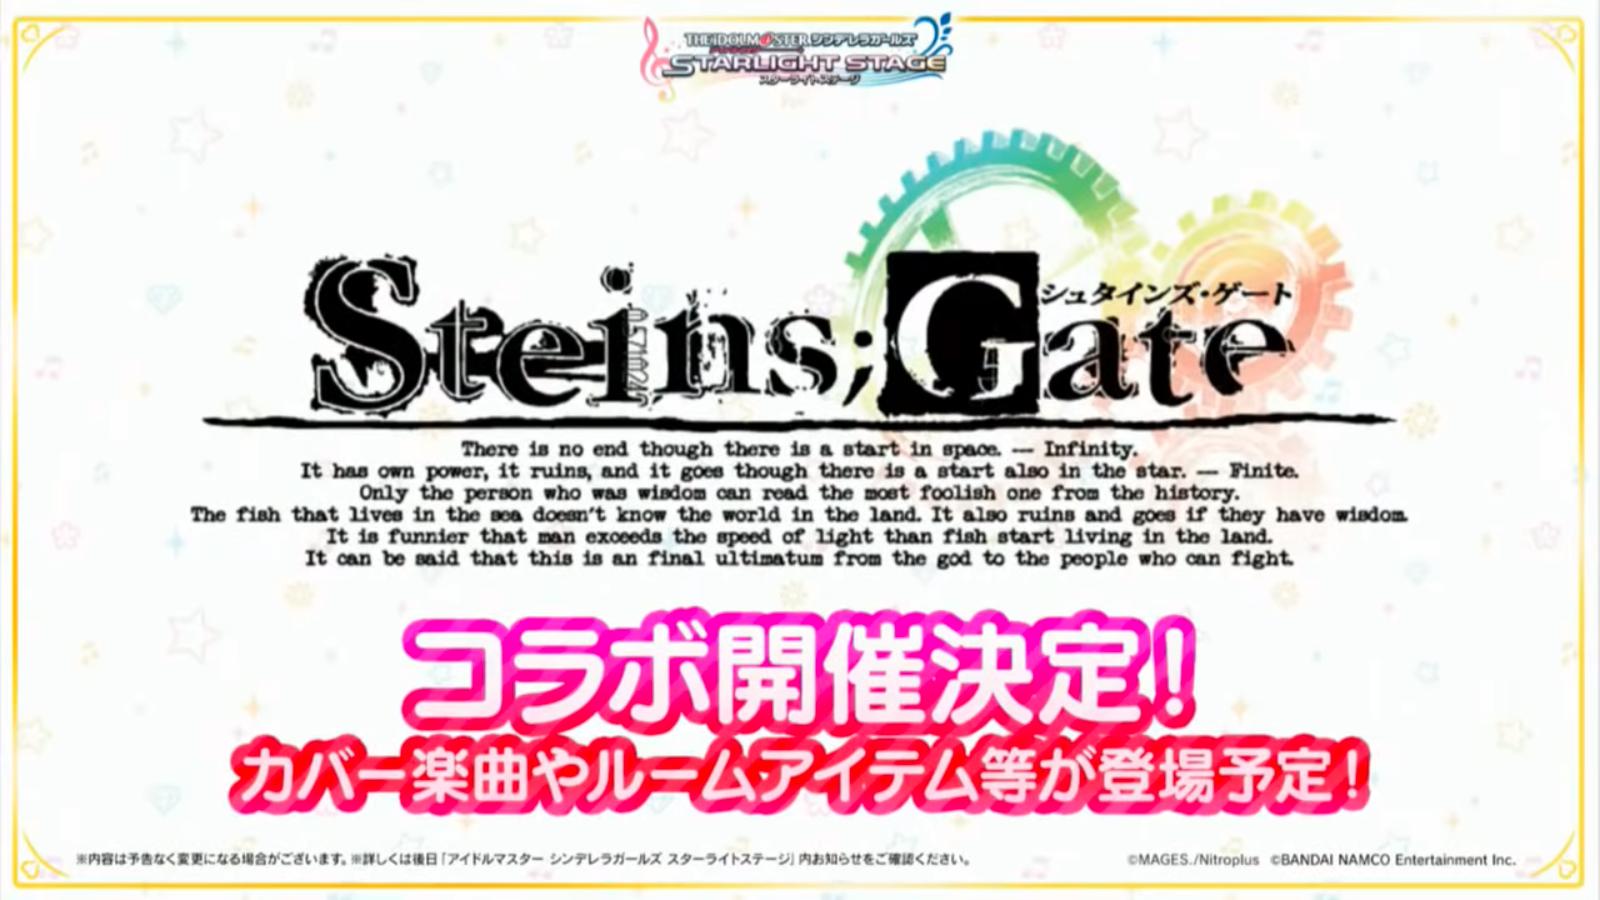 Every Steins Gate 10th Anniversary Project So Far Summarized Kiri Kiri Basara